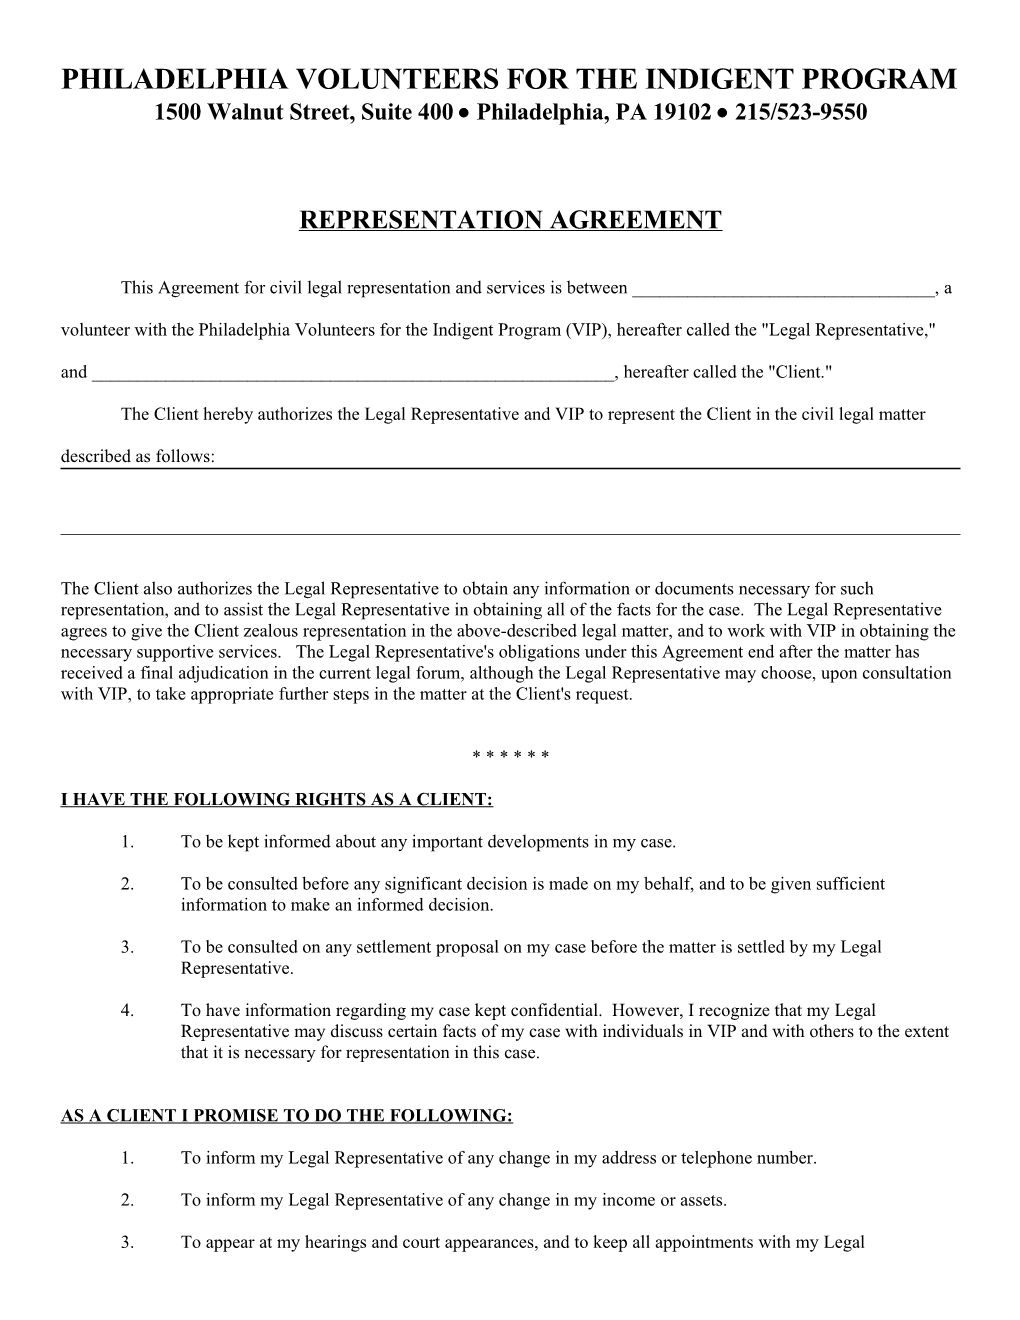 Representation Agreement WPD